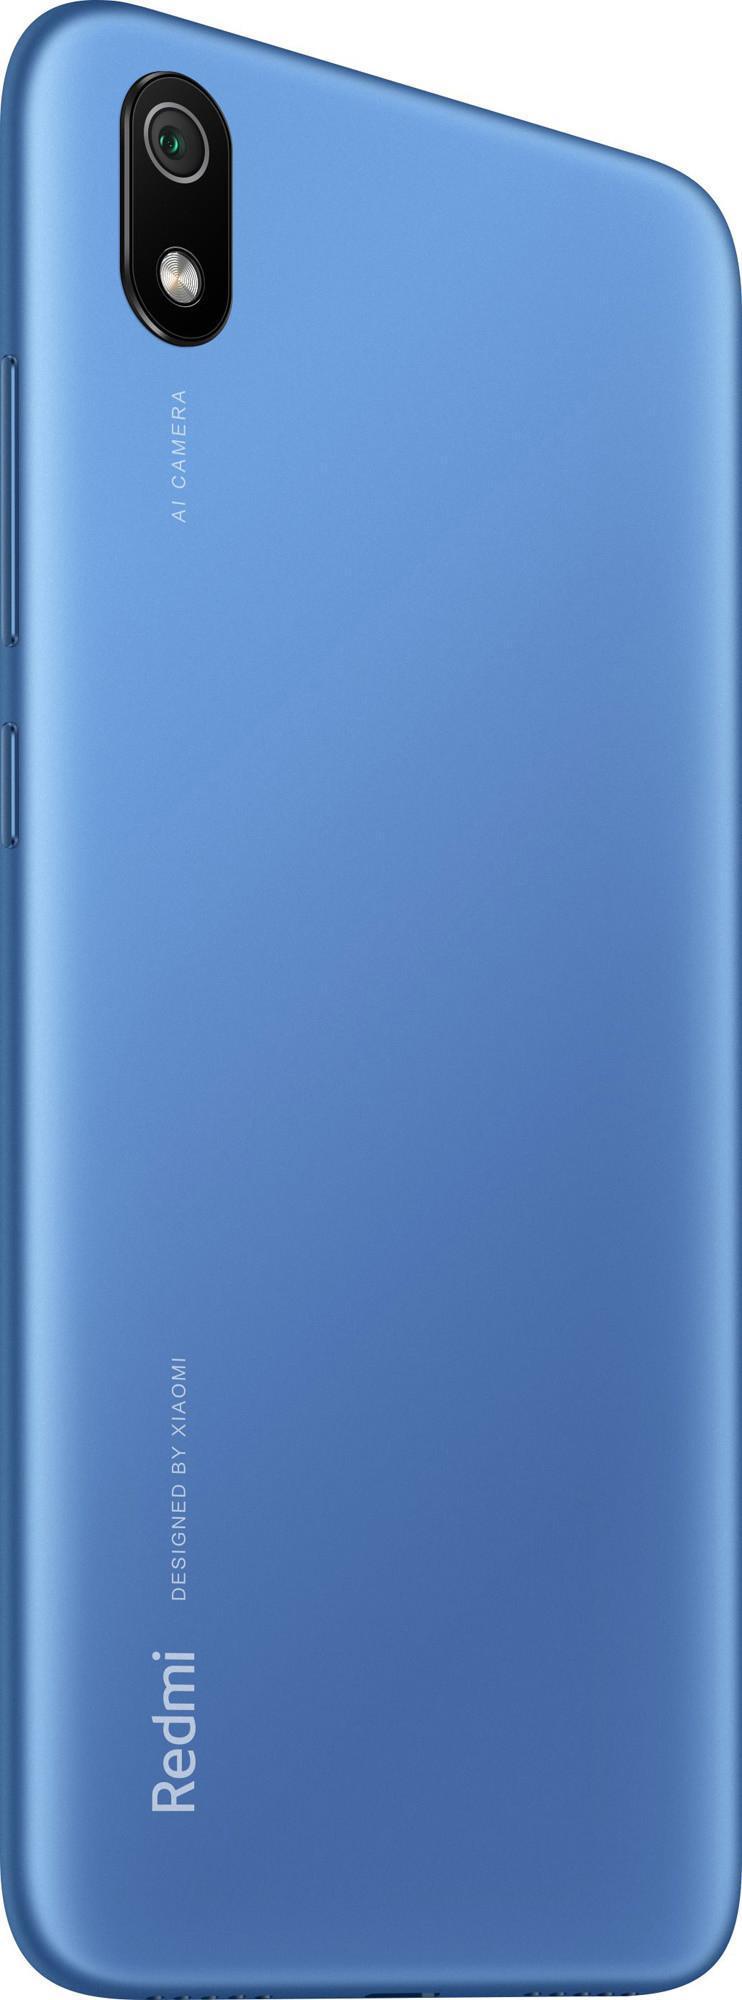 Смартфон Xiaomi Redmi 7A 2/16Gb Blue заказать